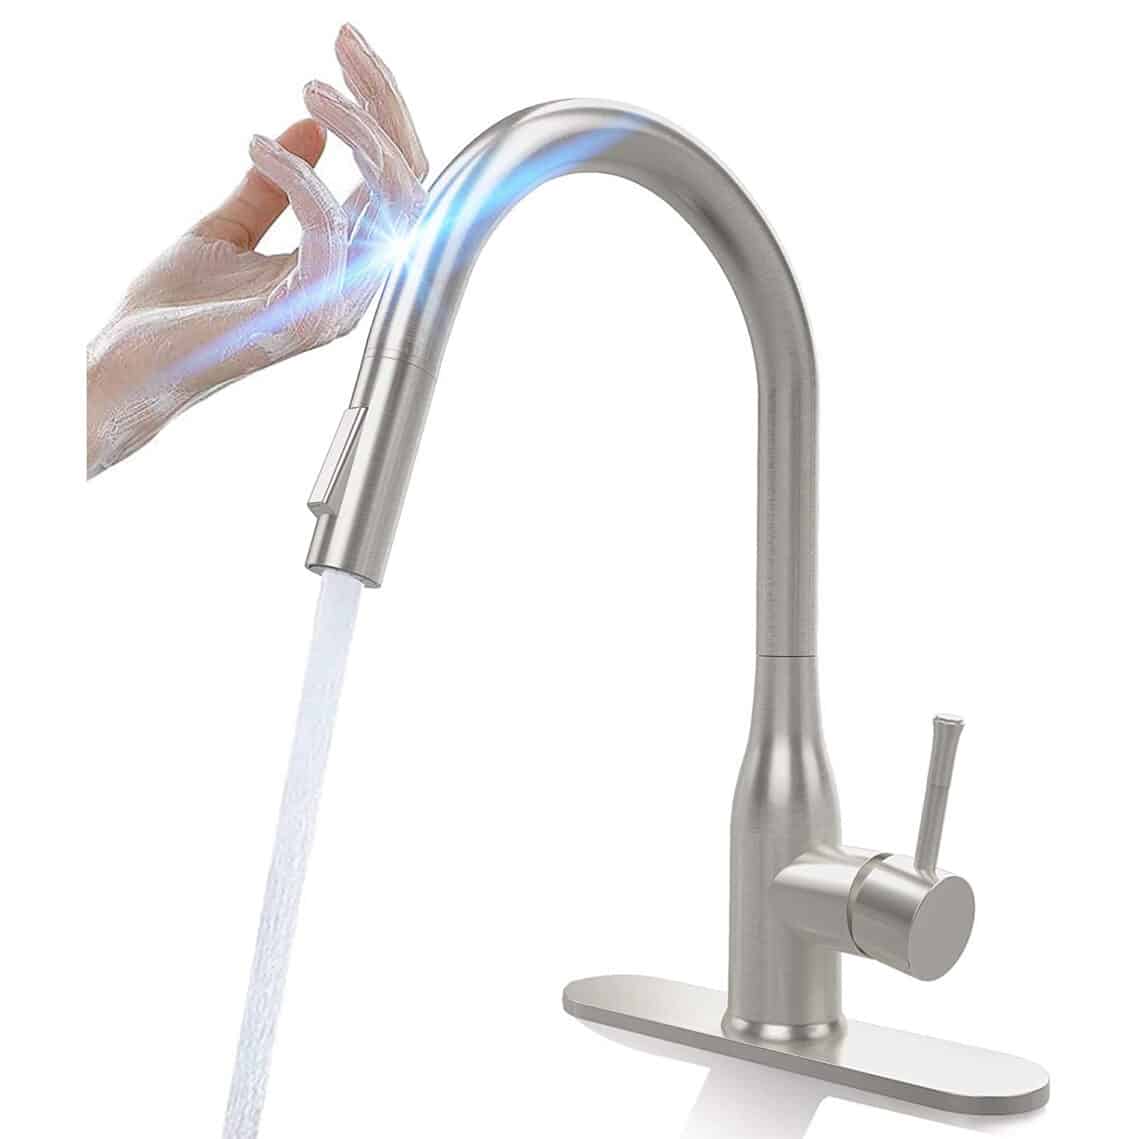 1. CWM Touch Kitchen Faucet W Pull Down Sprayer 1140x1139 